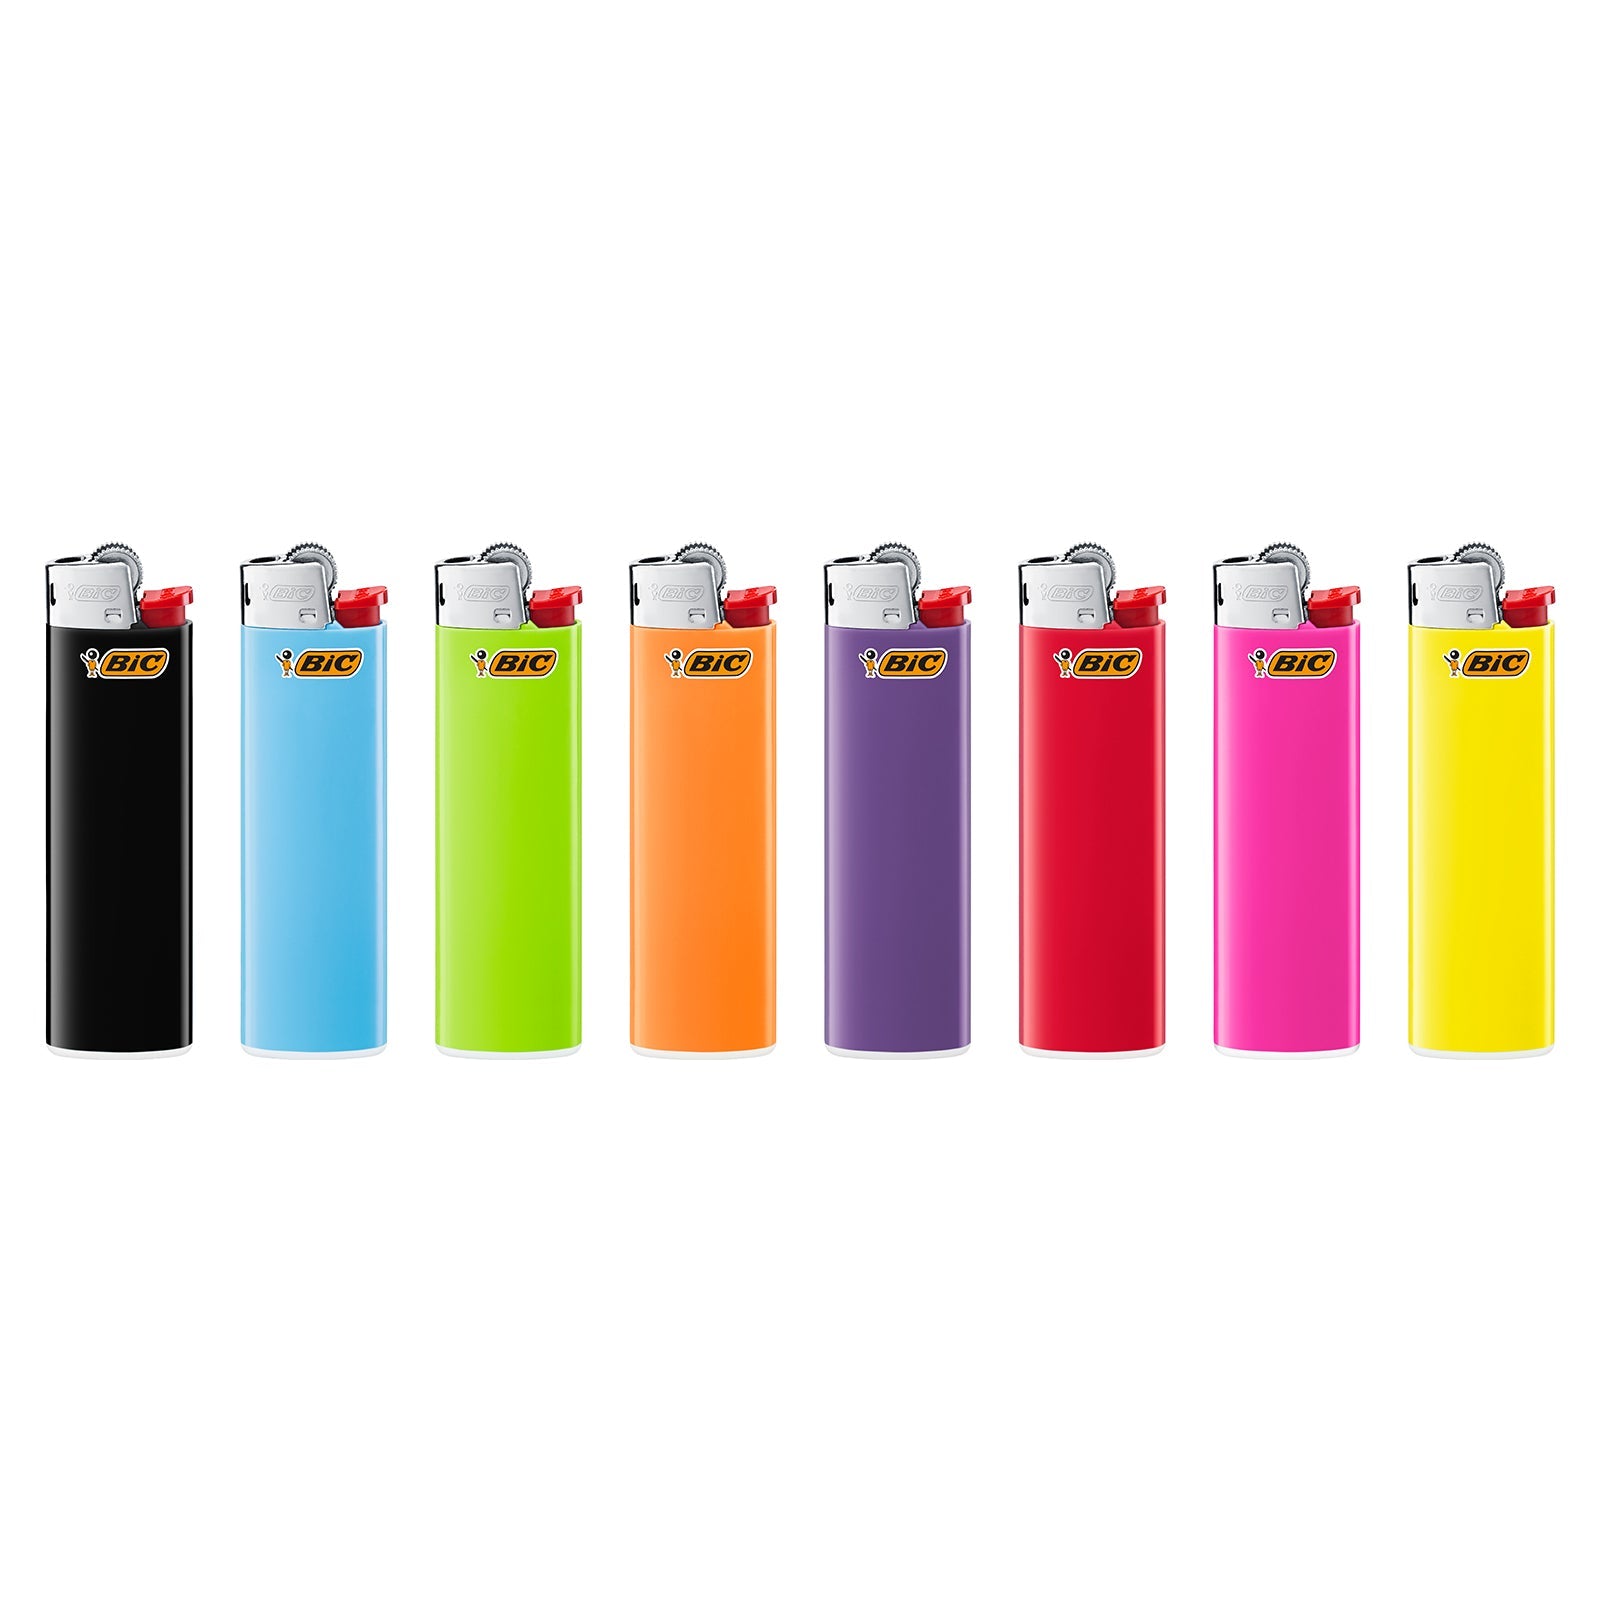 Bic Lighter J3 Slim Translocate Assorted Lighter | Home Appliances | Halabh.com